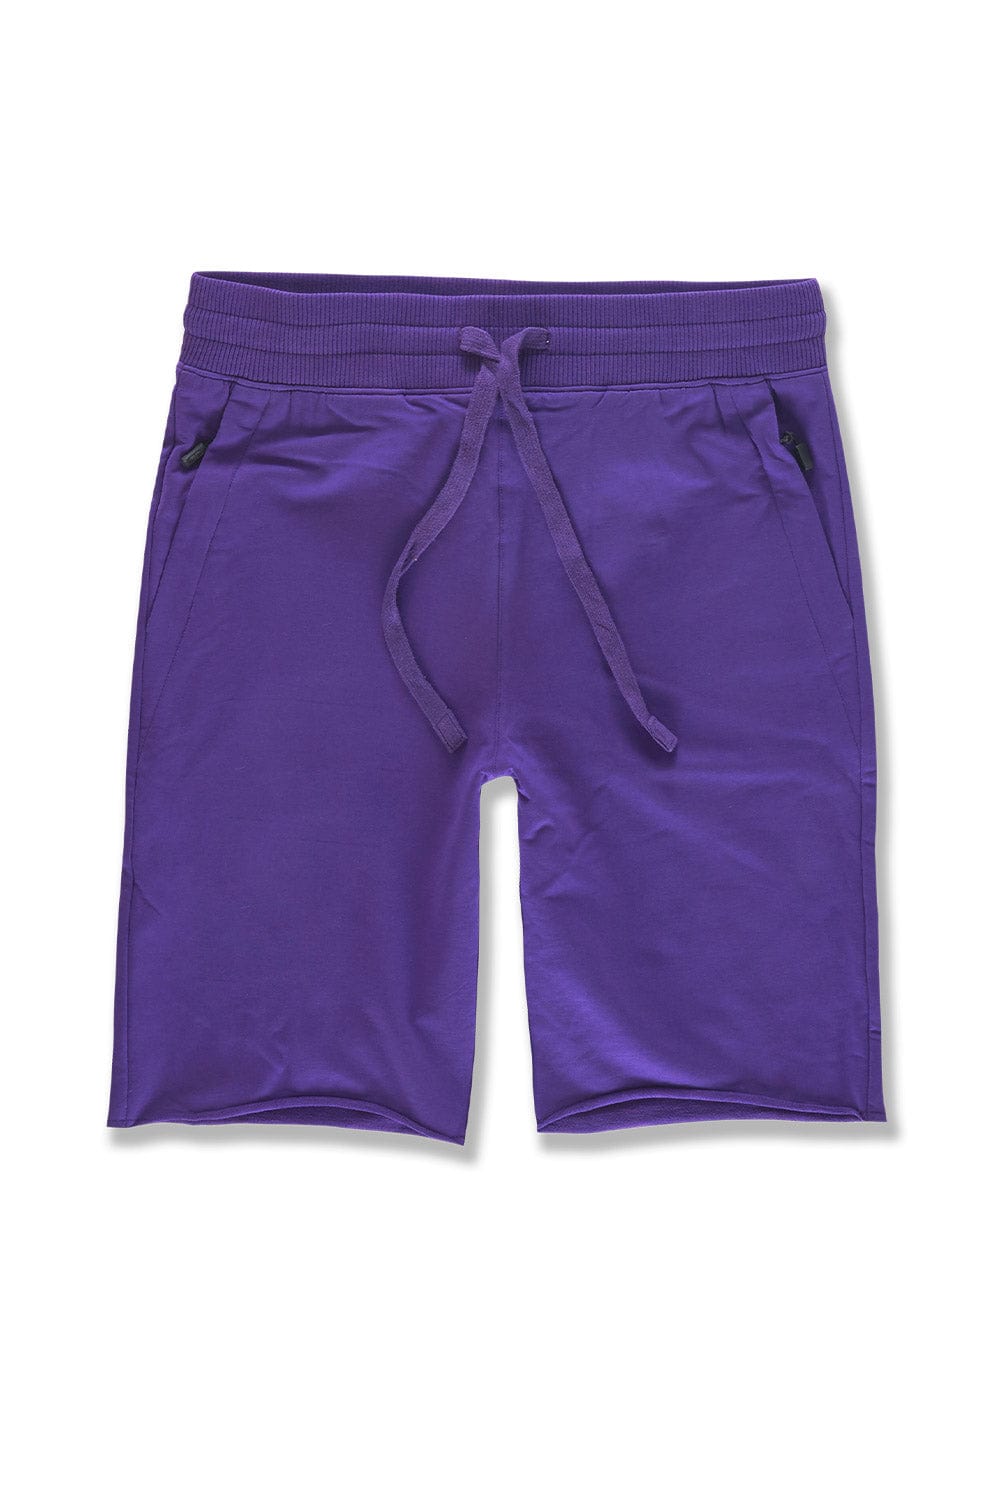 Jordan Craig OG - Palma French Terry Shorts (Purple)